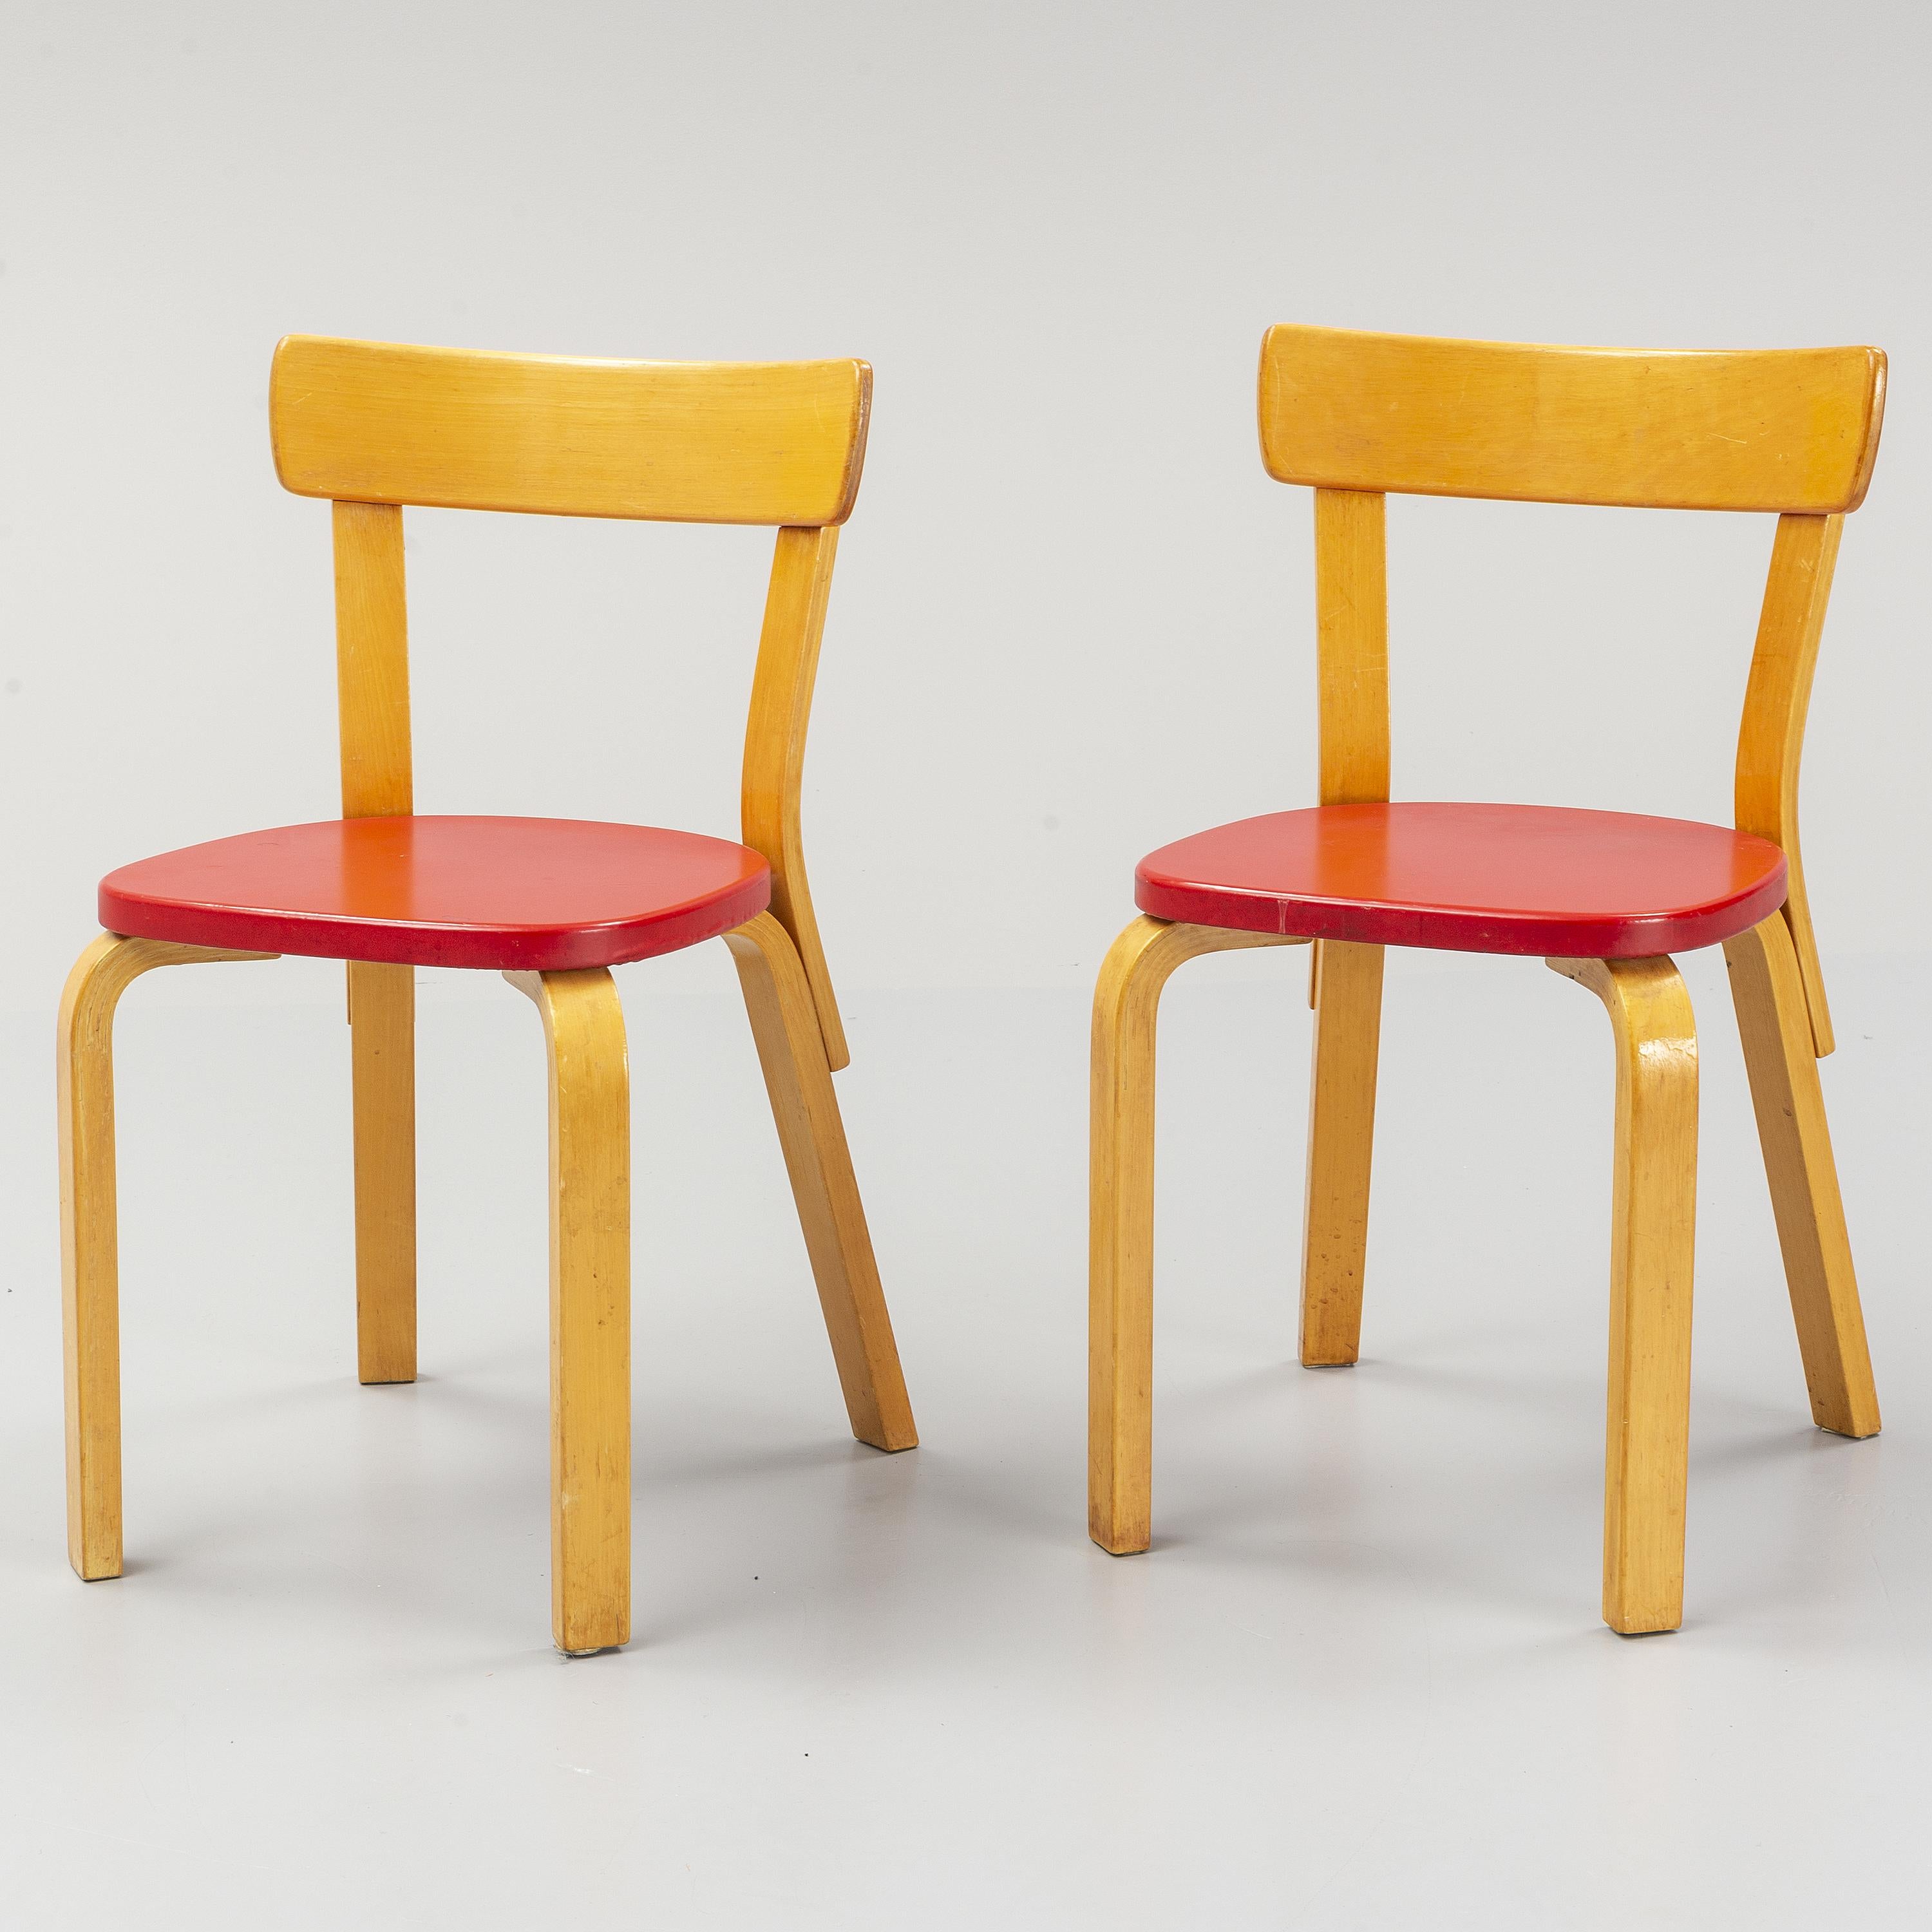 Scandinavian Modern Alvar Aalto, Model 69 Chair, Set of 4 from 1950 For Sale